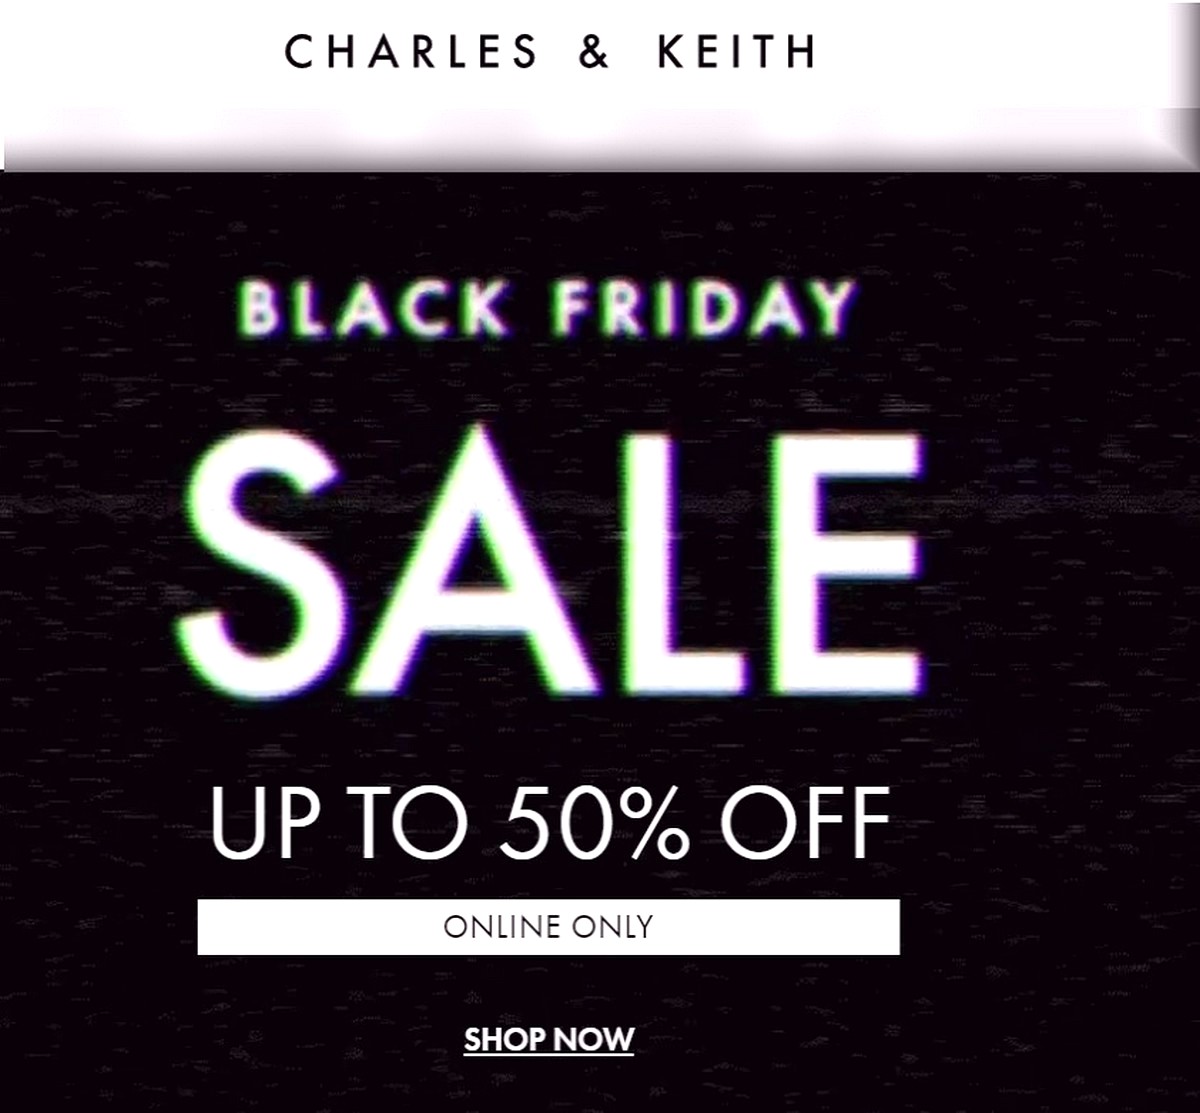 Charles-Keith-Black-Friday-Sale 24 Nov 2020 Onward: Charles & Keith Black Friday Sale up to 50% OFF